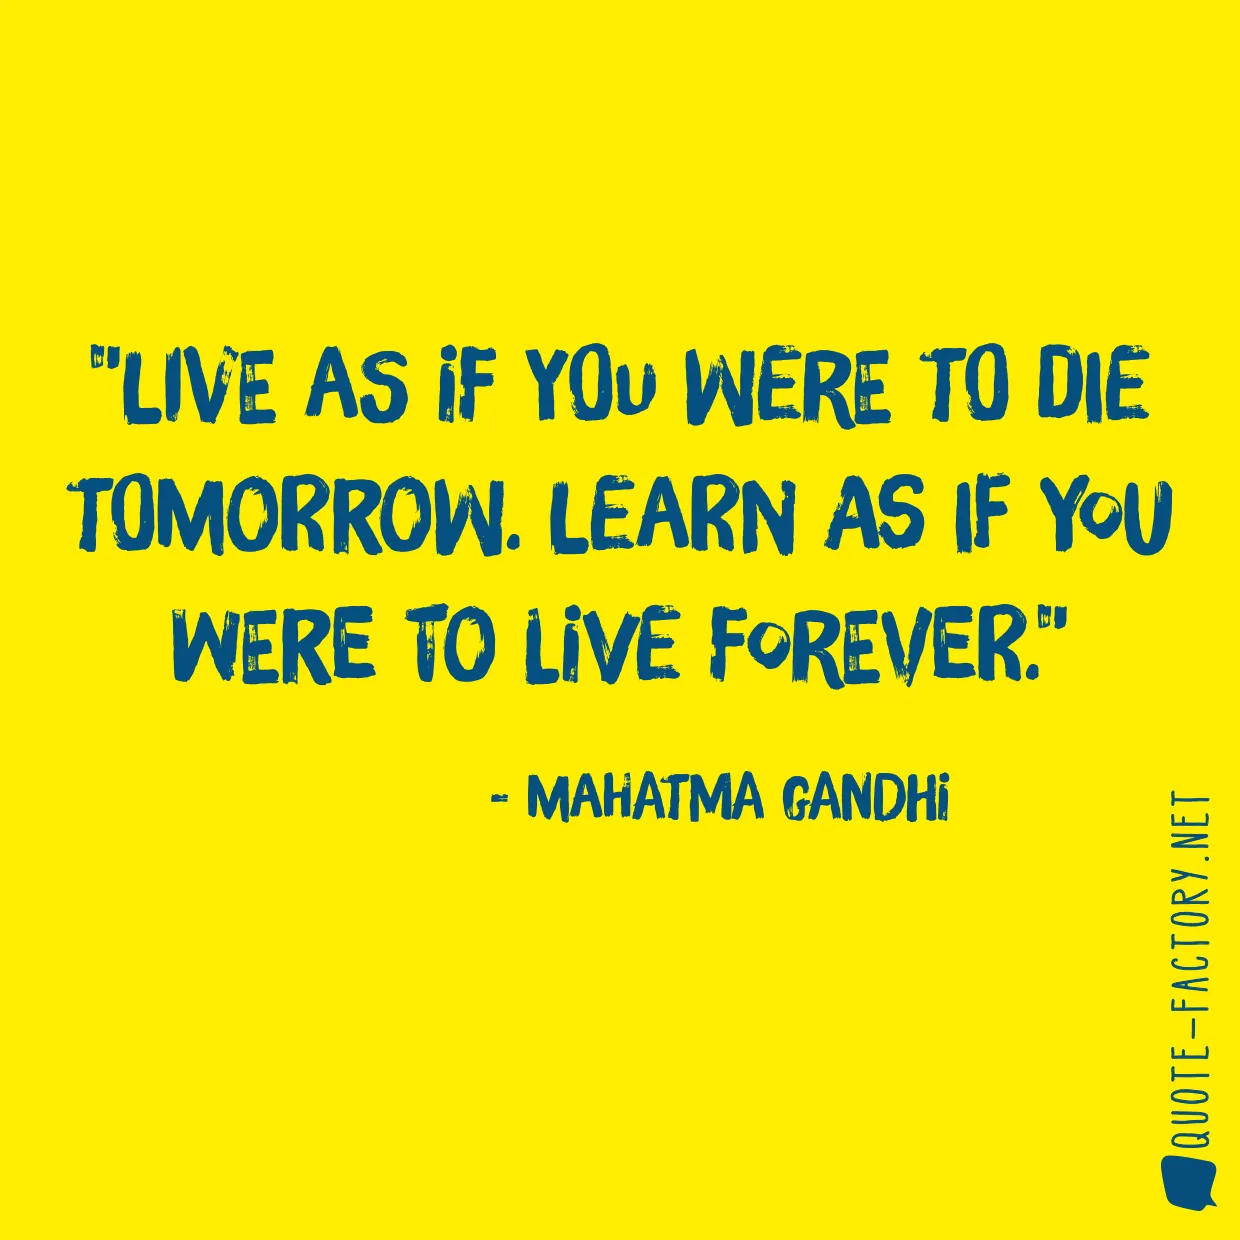  Mahatma Gandhi - Live As If You Were to Die Tomorrow